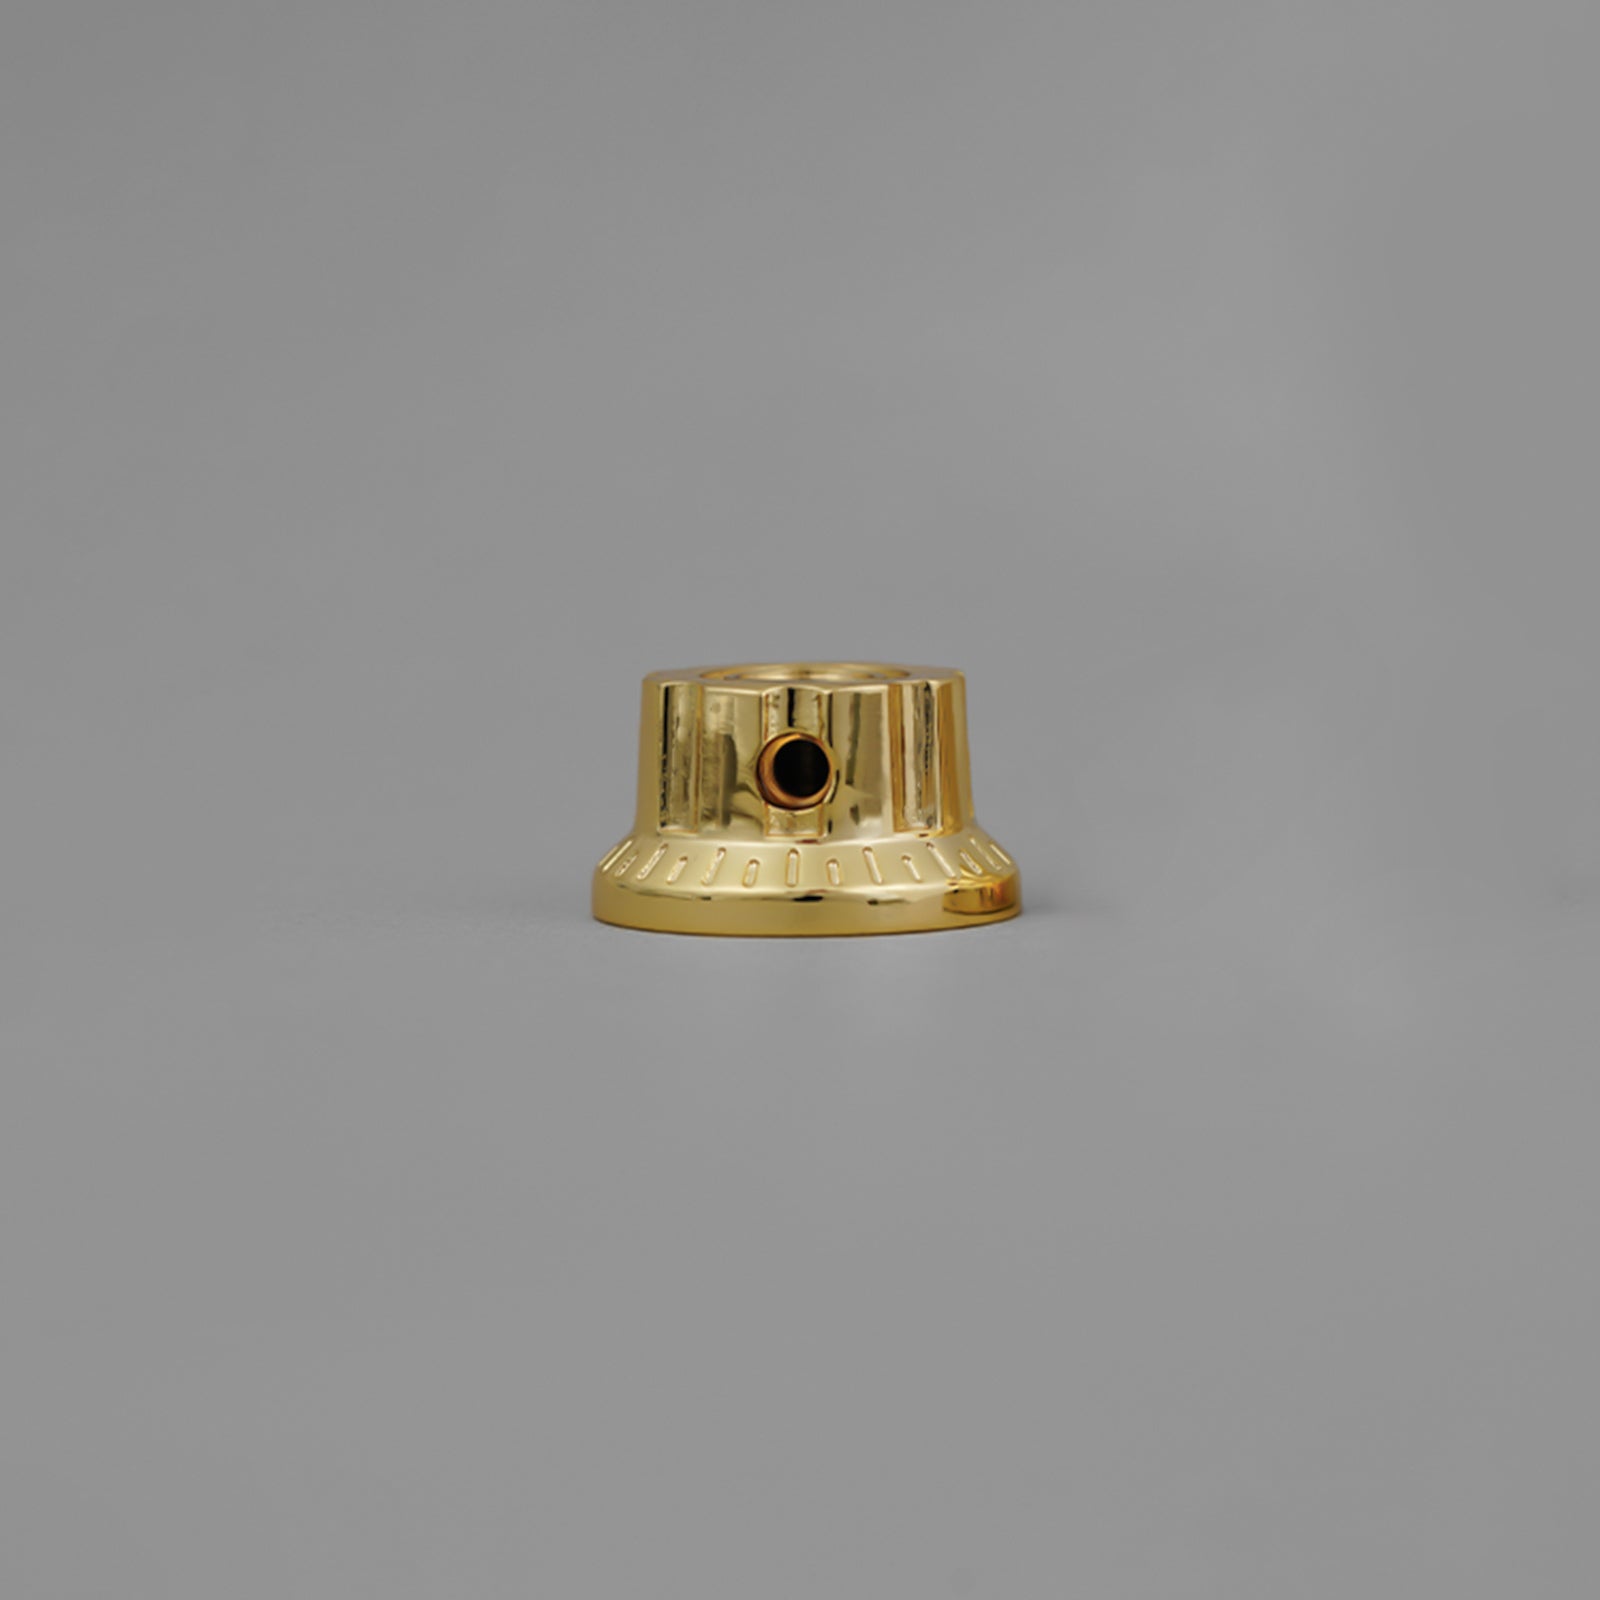 Guyker NKB-004 Potentiometer Knob Set Gold Bronze Chrome Diameter 6MM